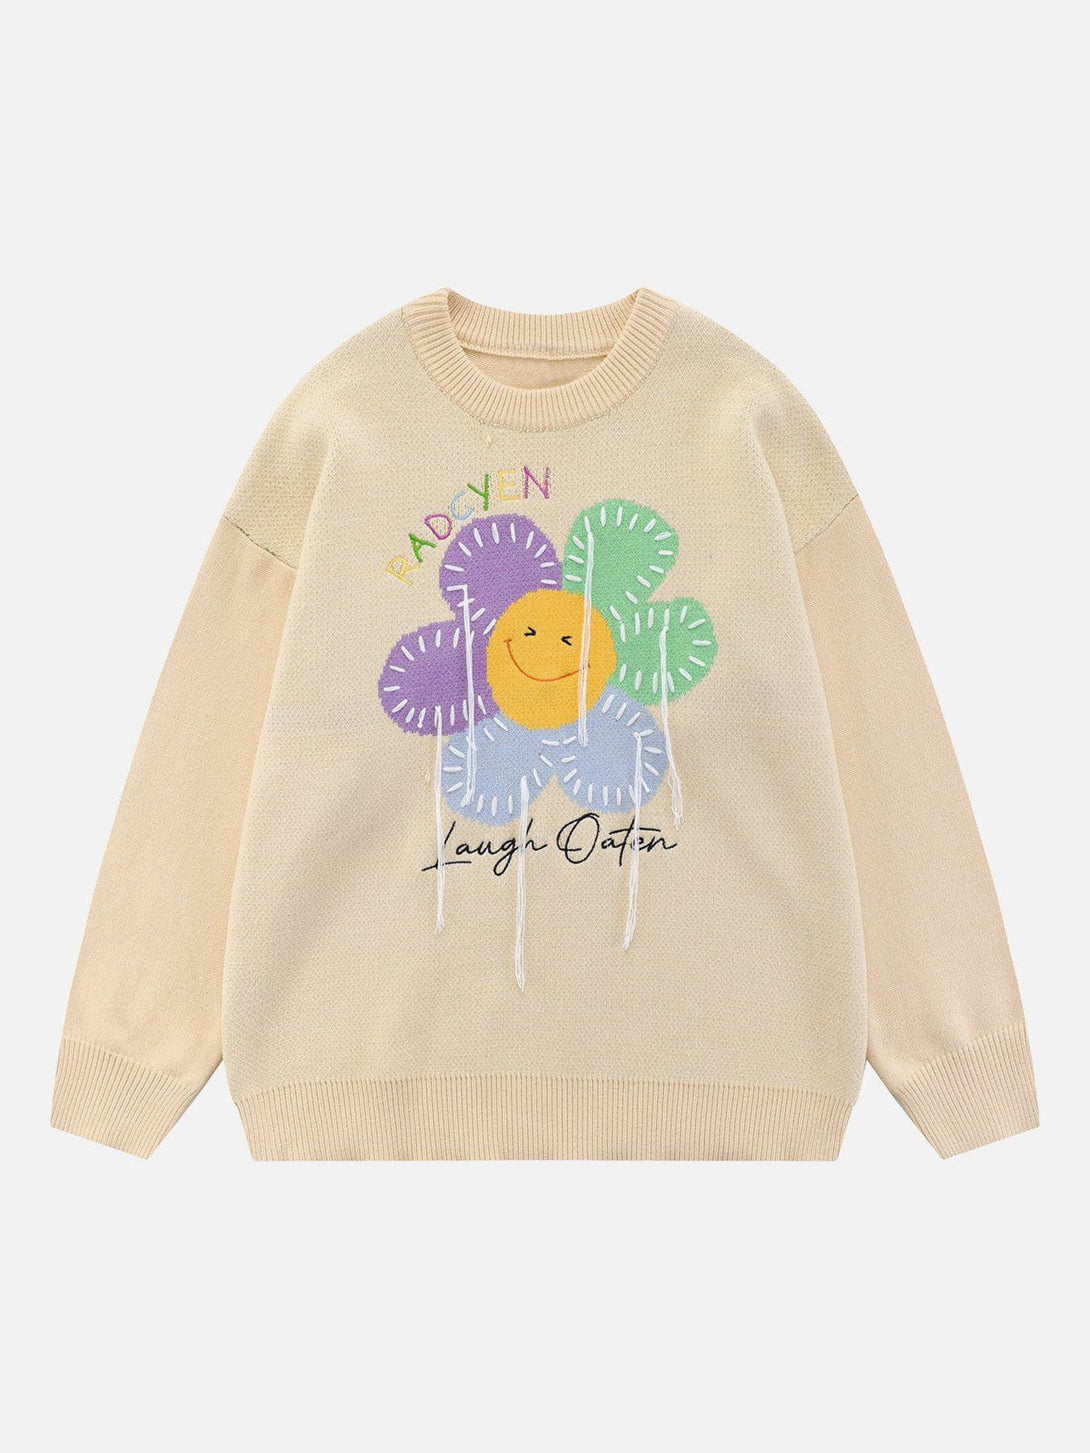 Majesda® - Sun Flower Graphic Sweater outfit ideas streetwear fashion